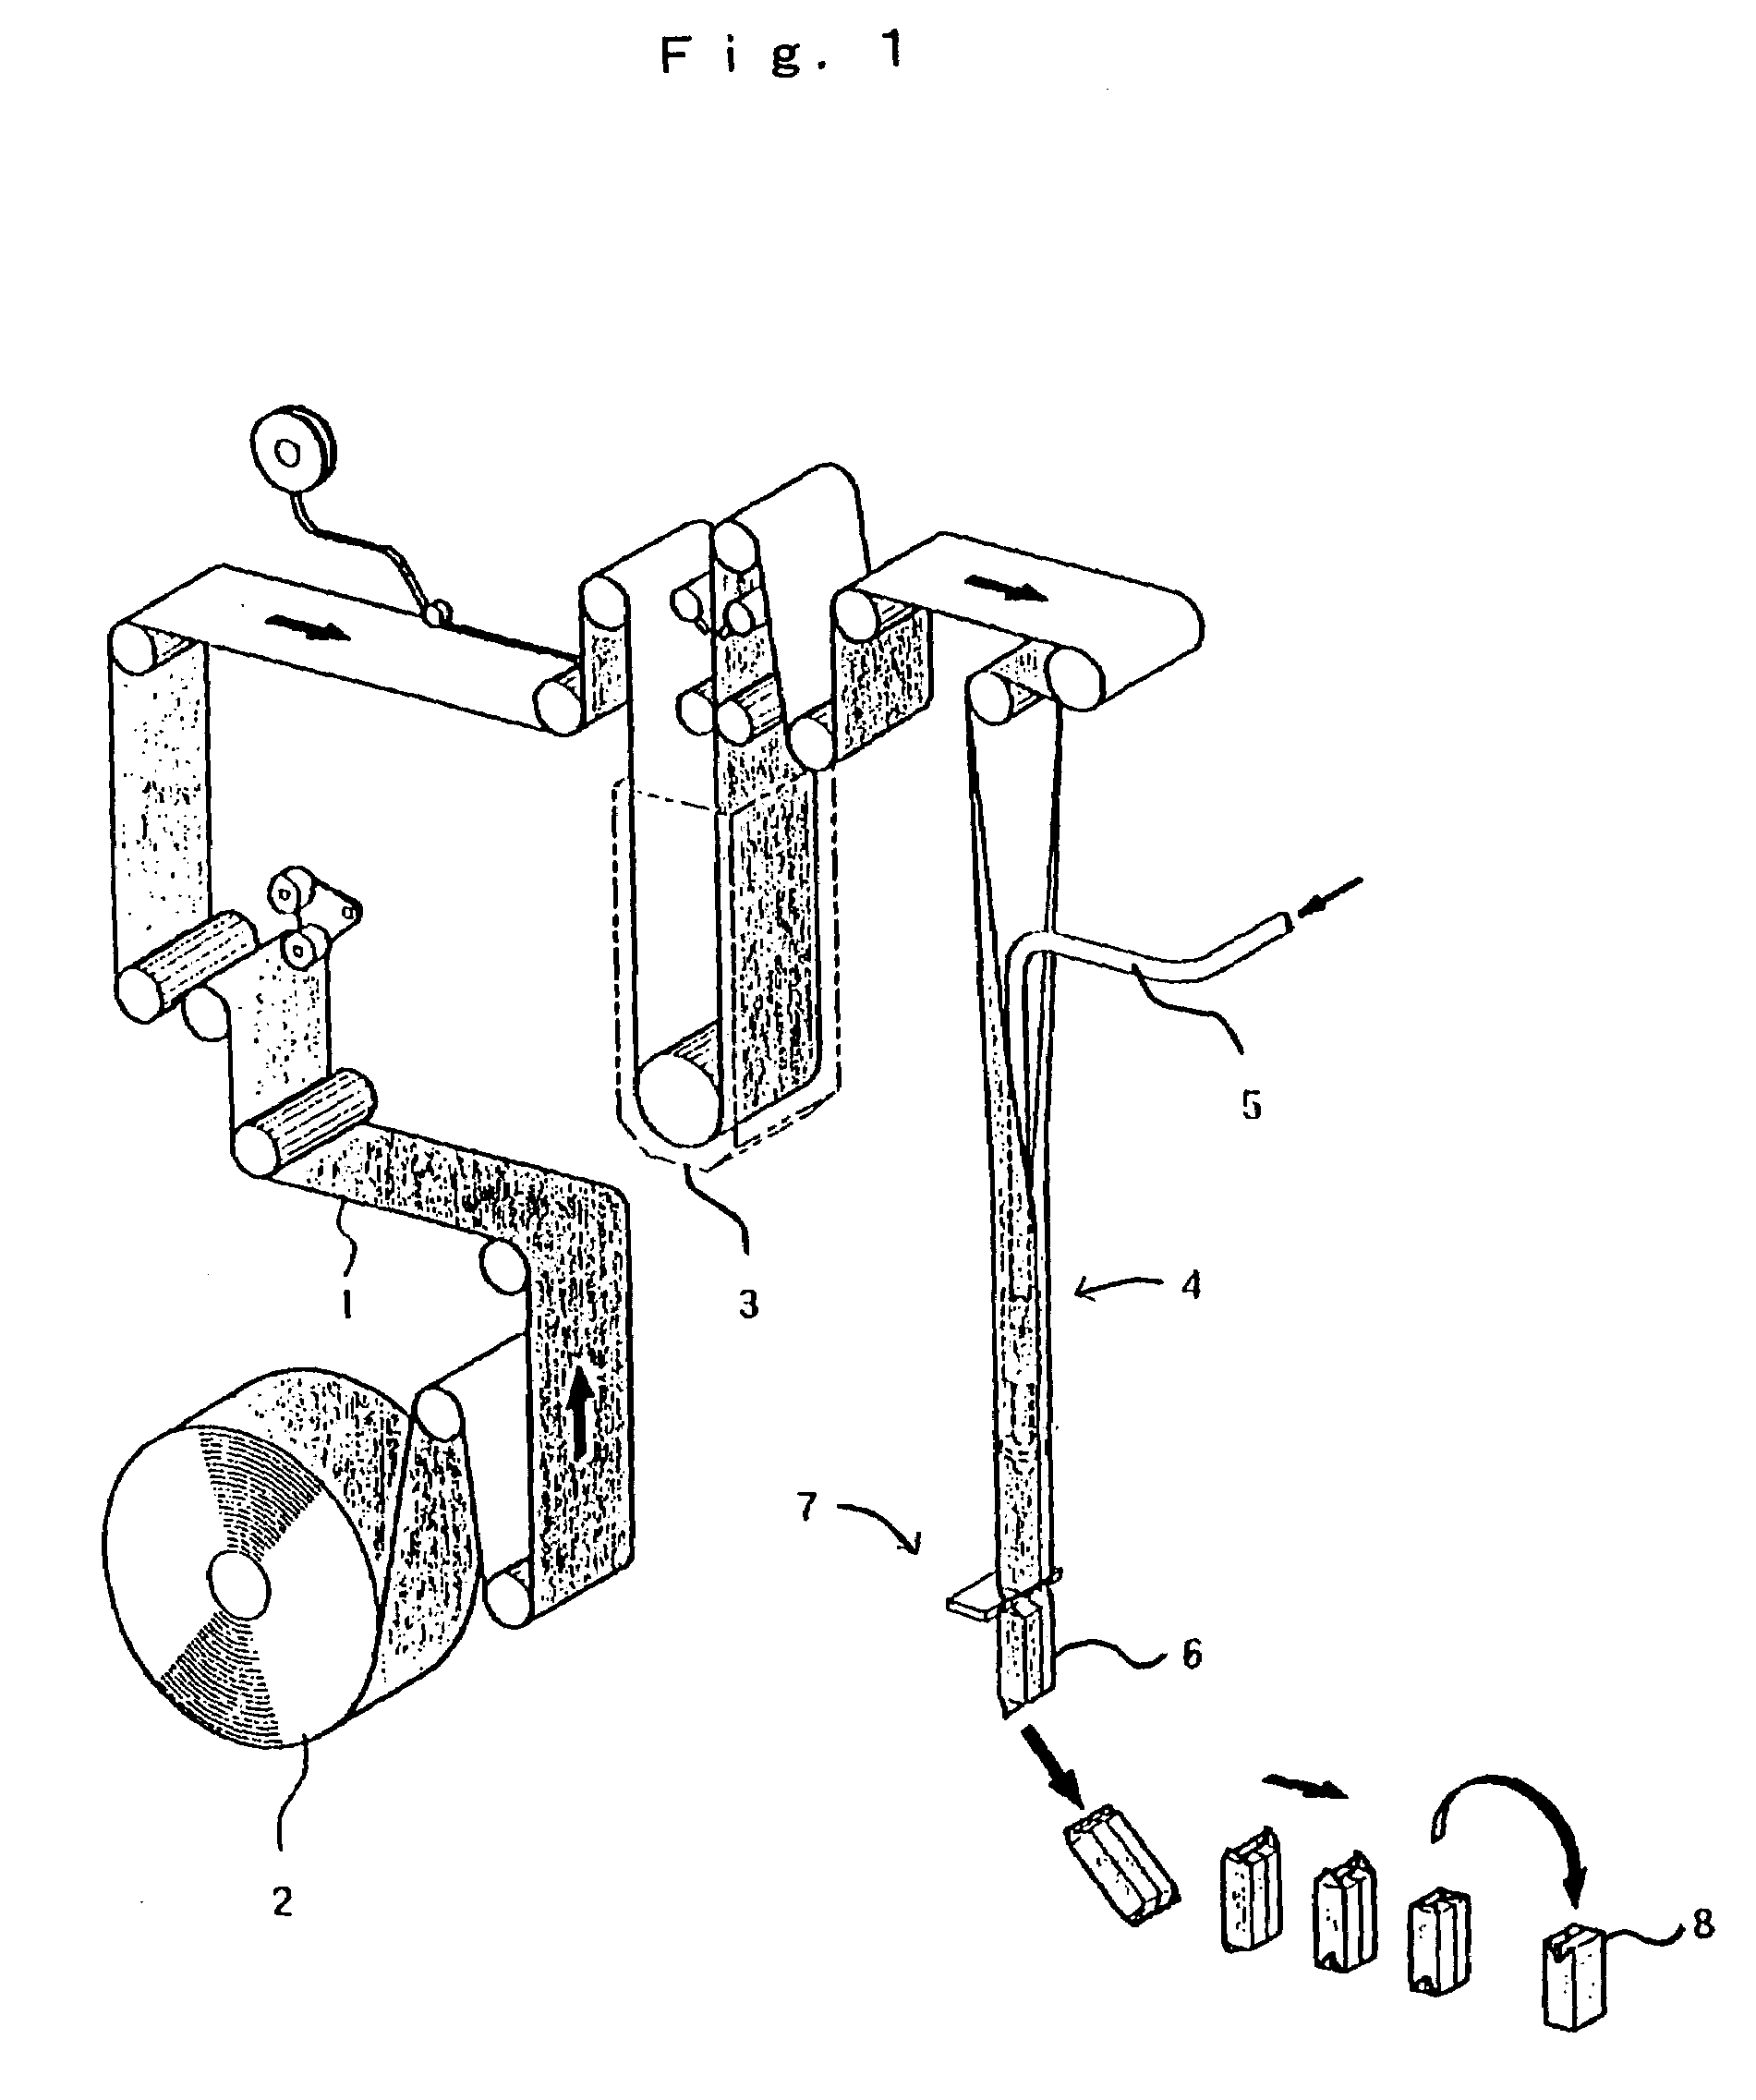 Ultrasonic sealing apparatus